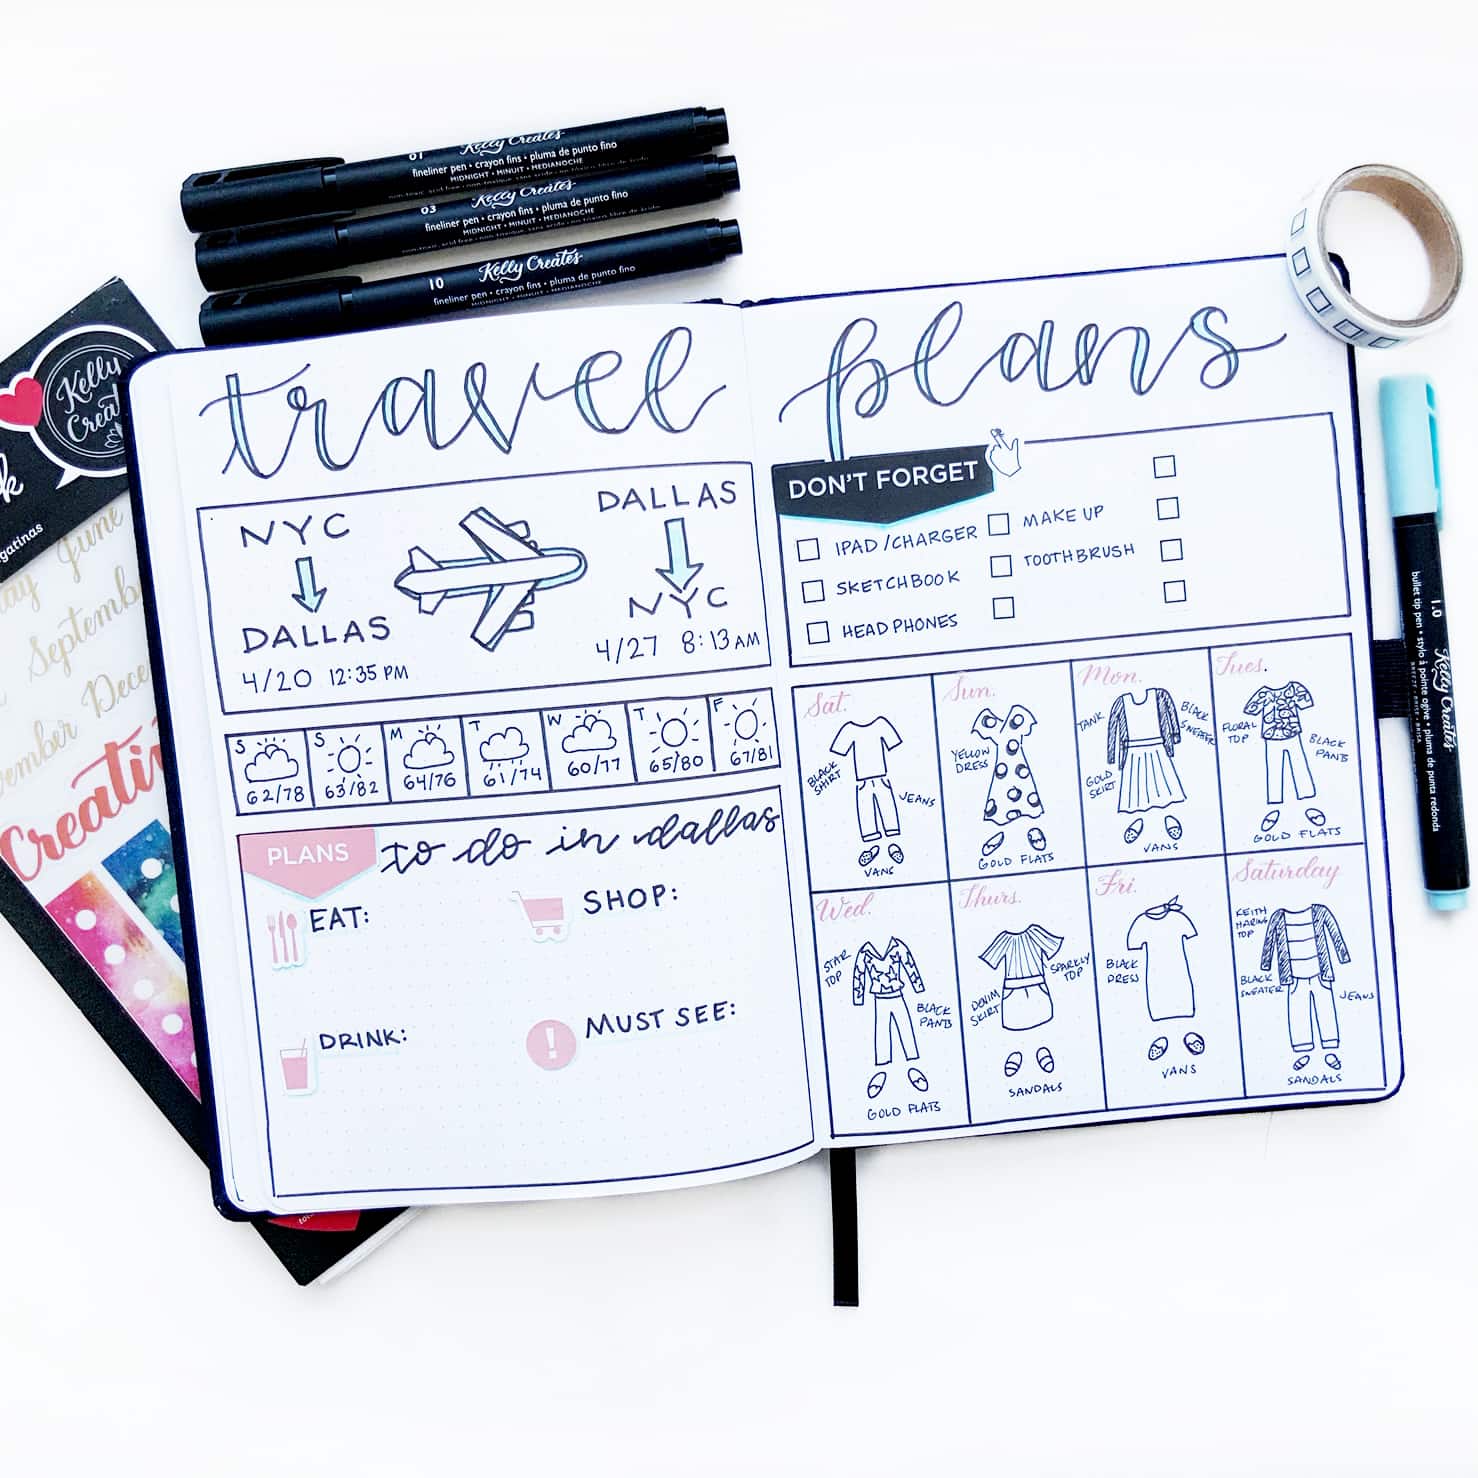 travel diary ideas pinterest